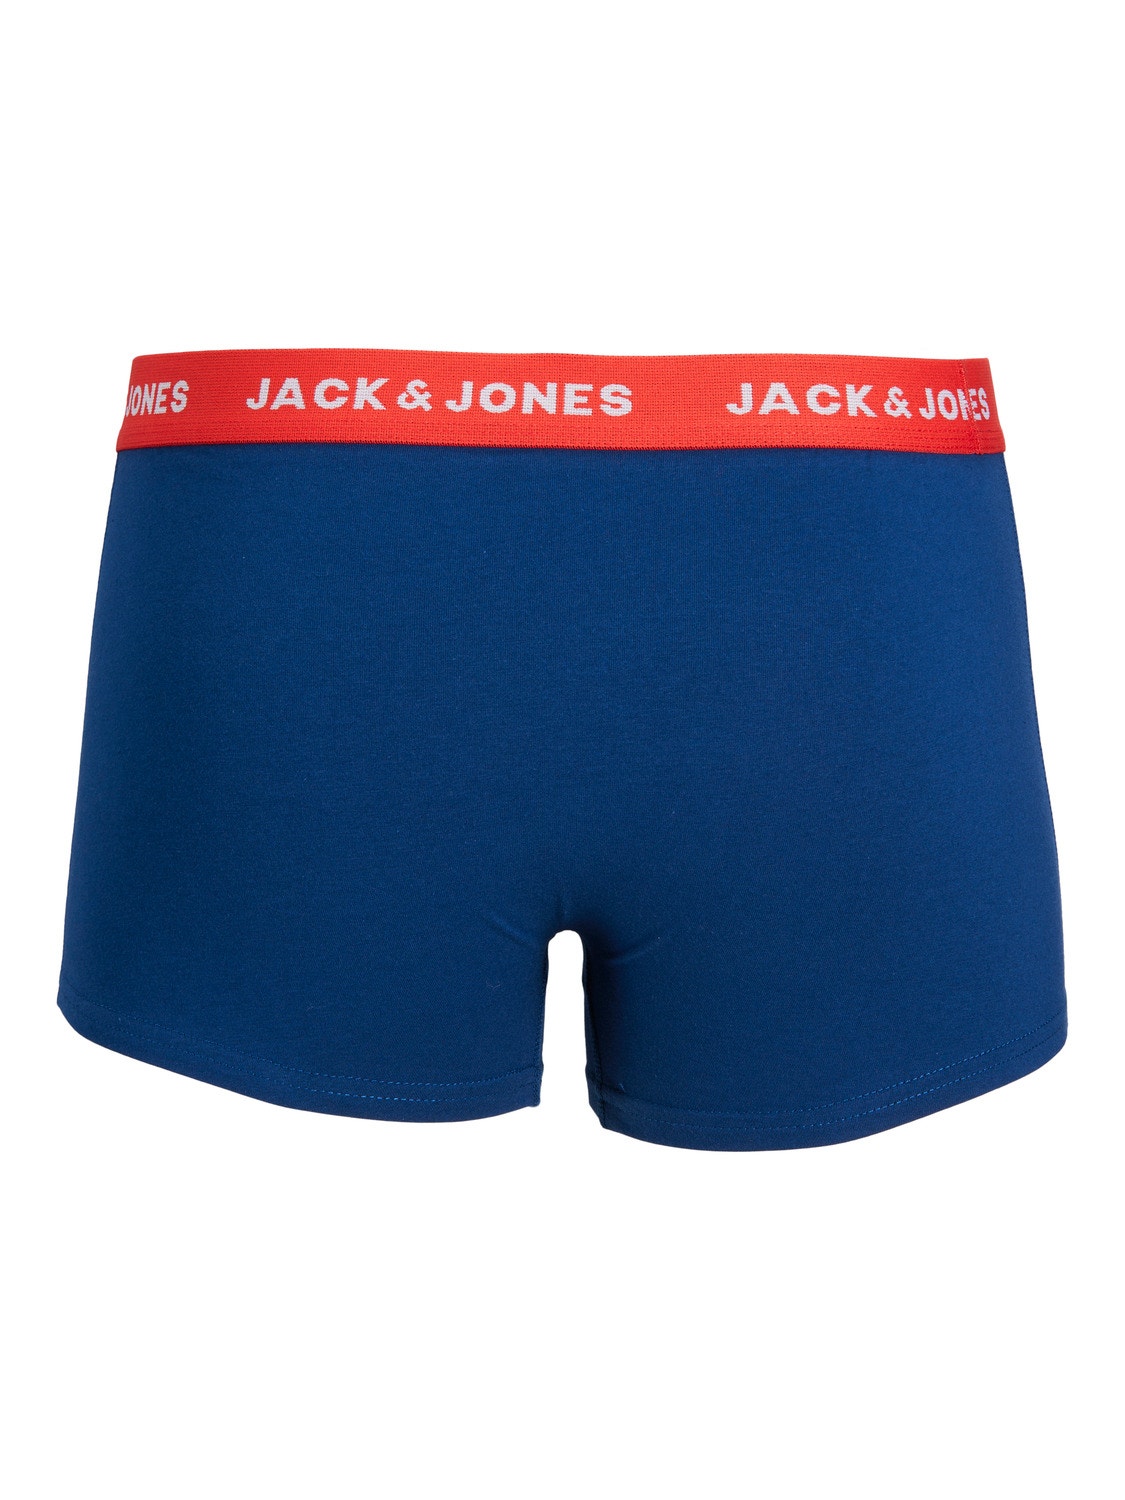 Jack & Jones 5 Trunks -Surf the Web - 12144536